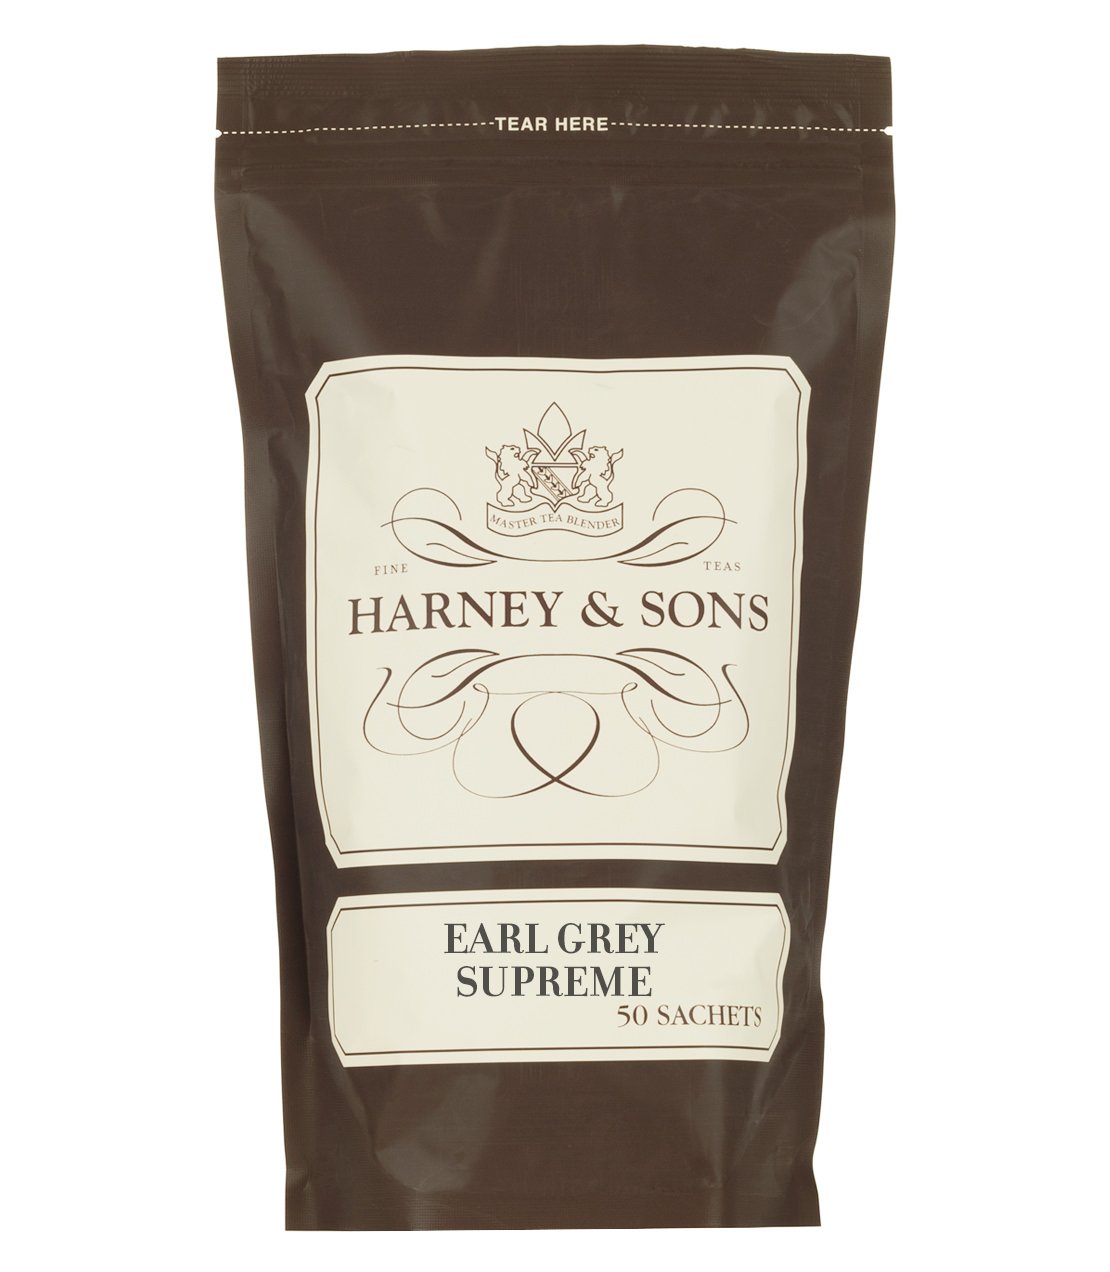 Earl Grey Supreme - Harney & Sons Teas, European Distribution Center